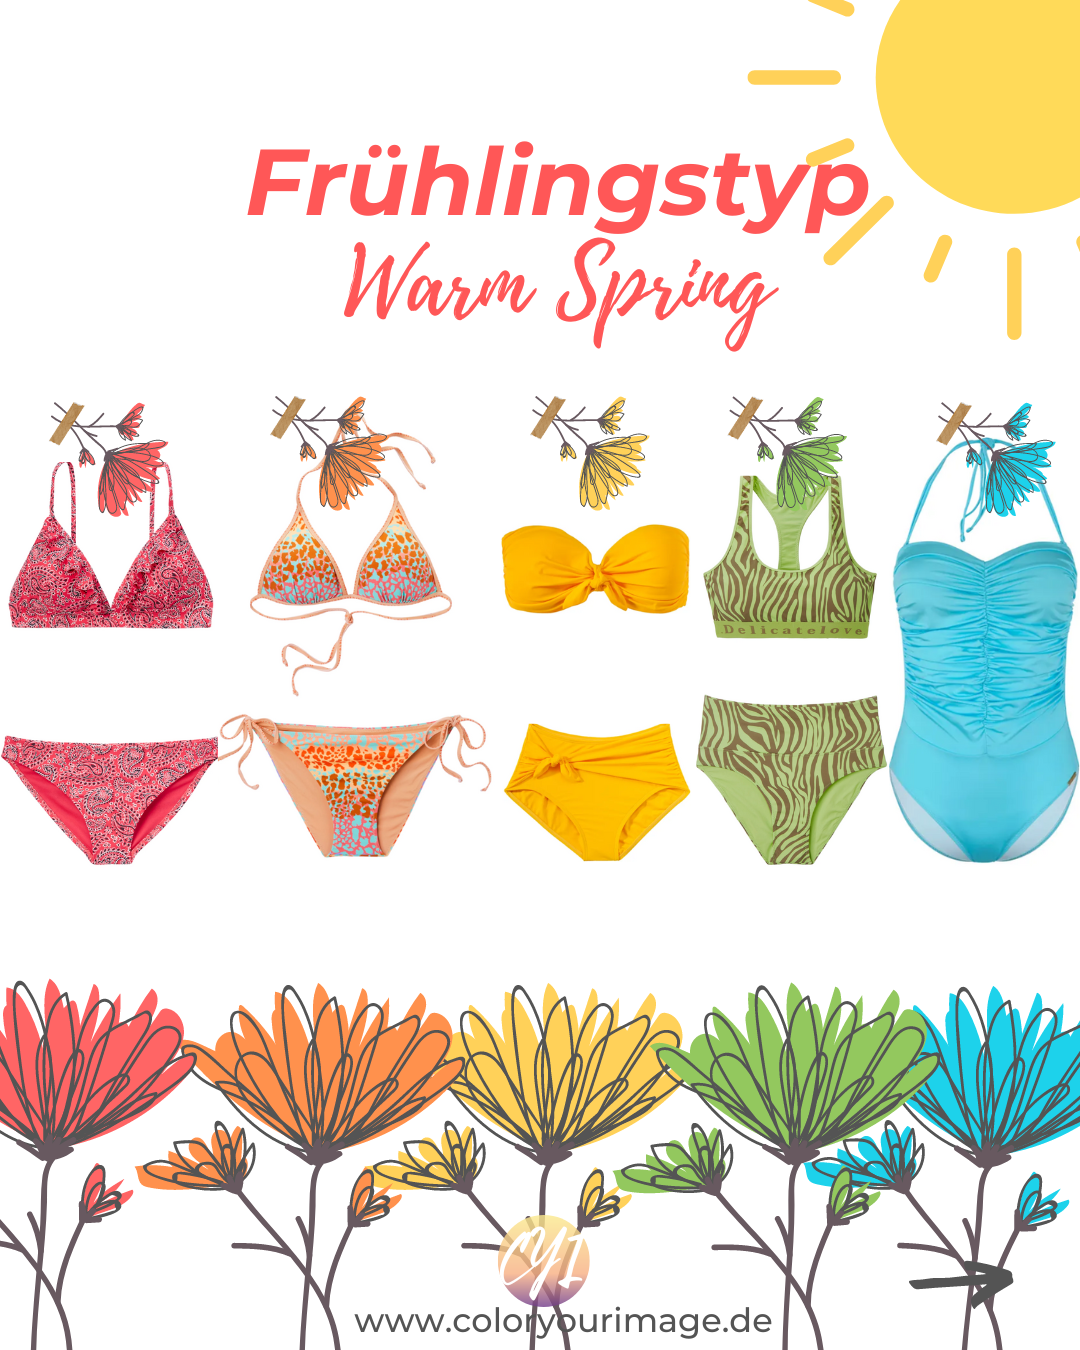 Perfekte Farben für den Frühlingstyp, warm spring, Mode Inspirationen, Frühlingstyp, Bikini, Badeanzug, perfekte Frühlings - Farben, Farben, Impressionen Shop